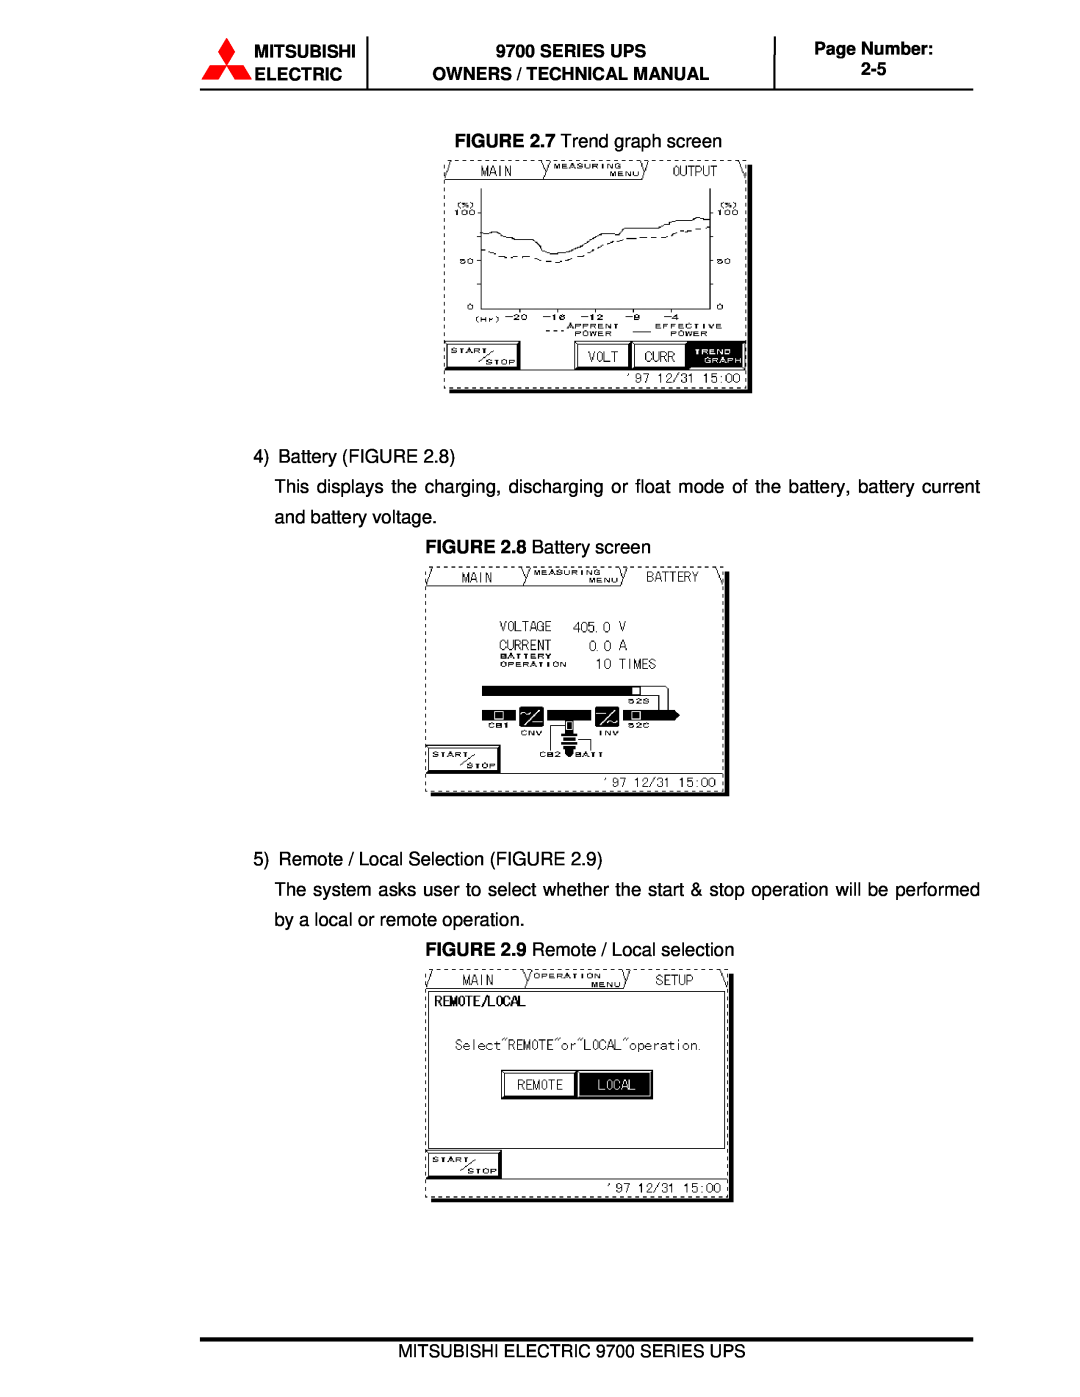 Mitsubishi Electronics 9700 Series technical manual 7 Trend graph screen 4 Battery FIGURE 